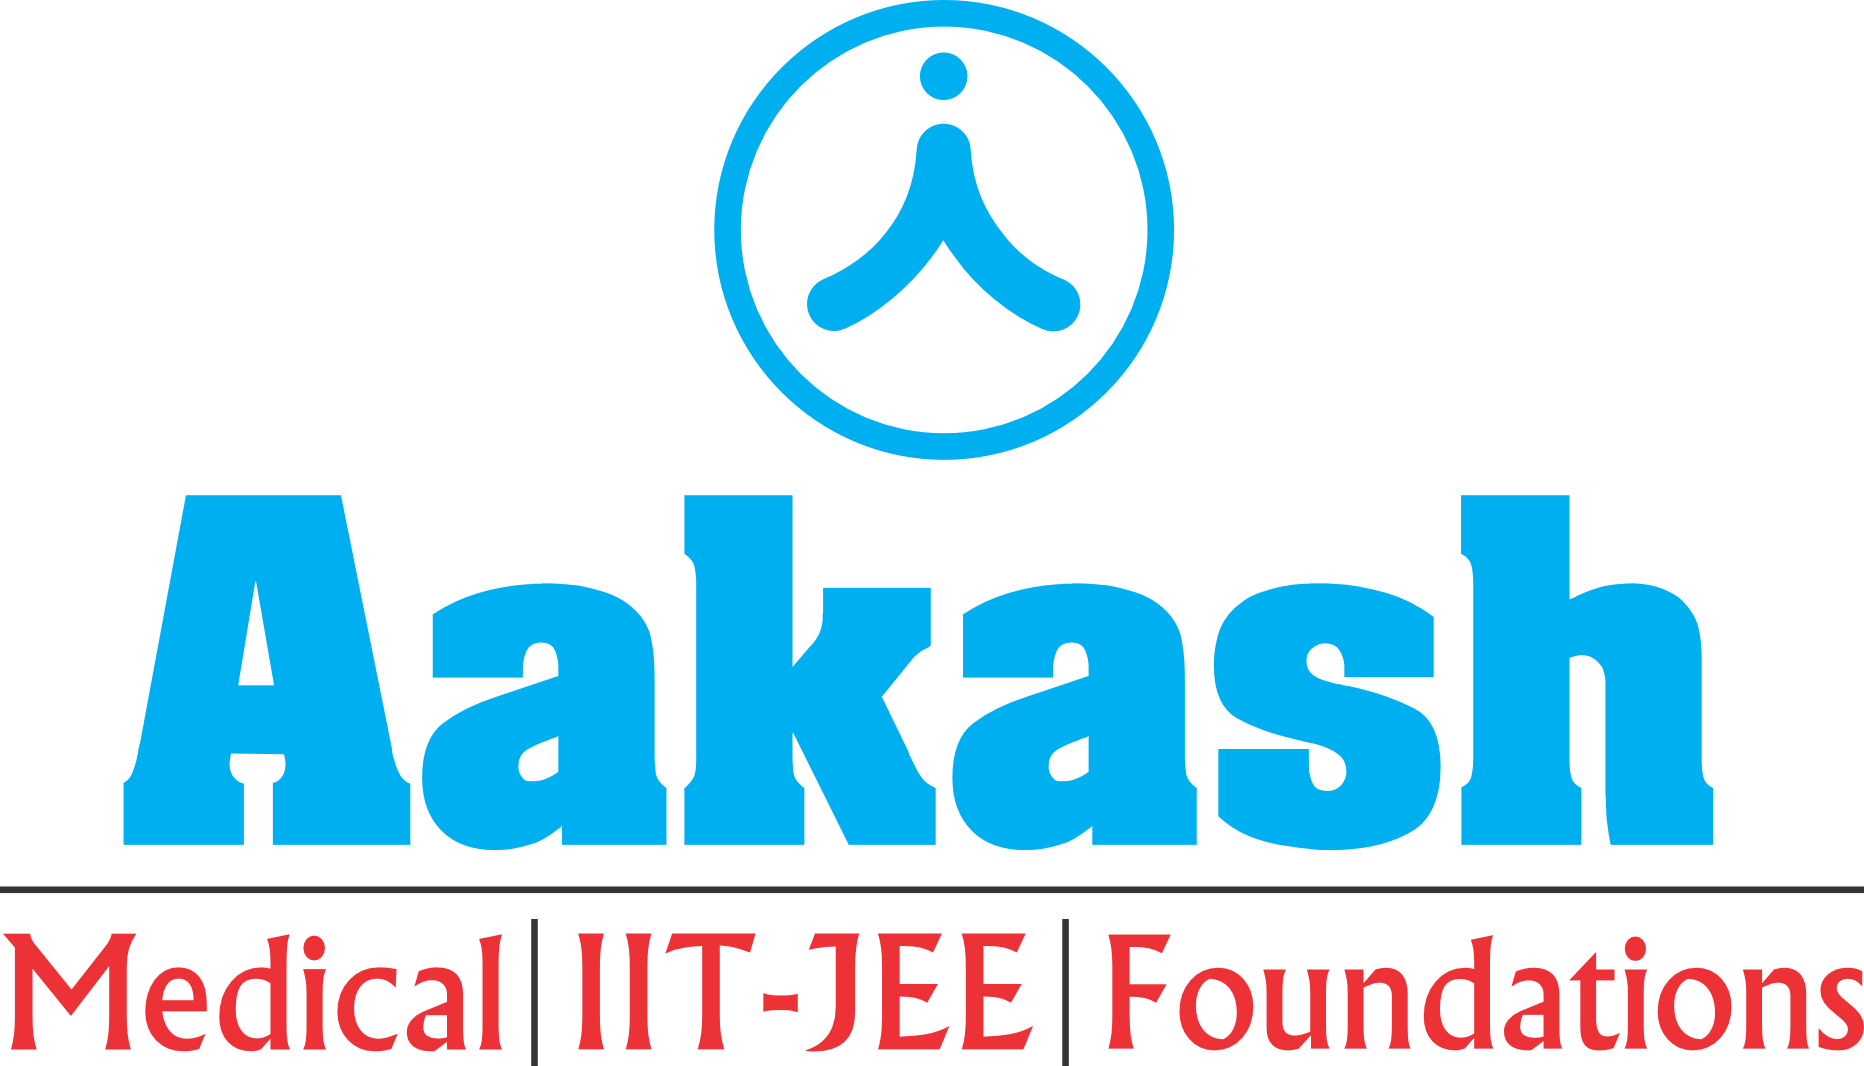 Aakash Byju's Logo